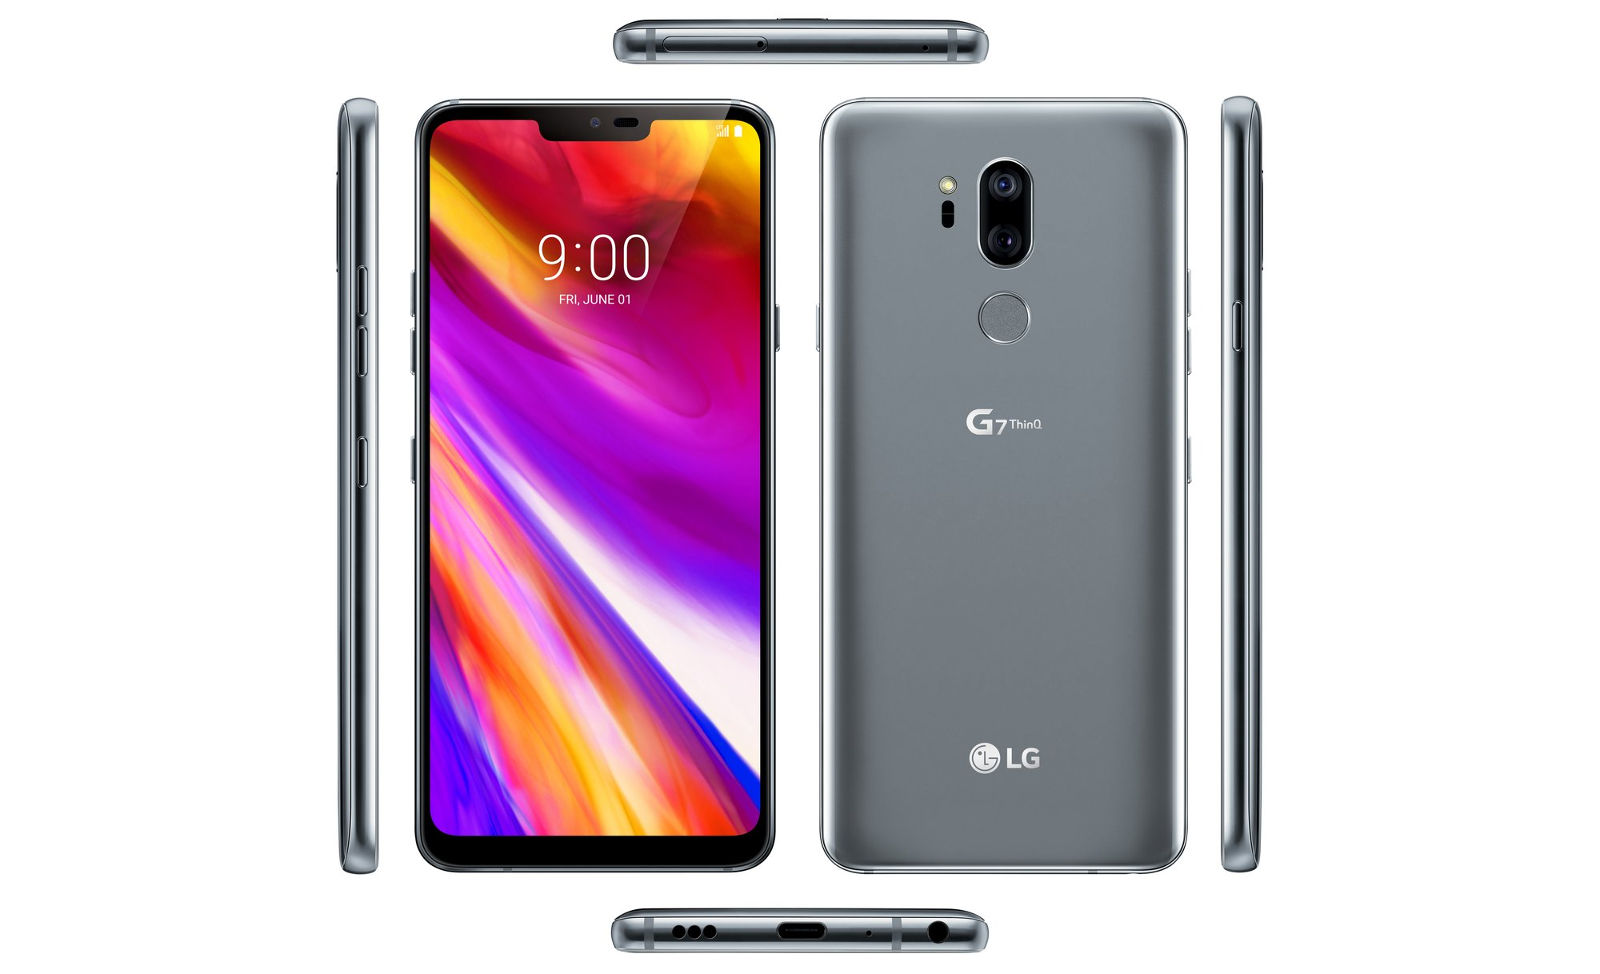 LG G7 ThinQ renders